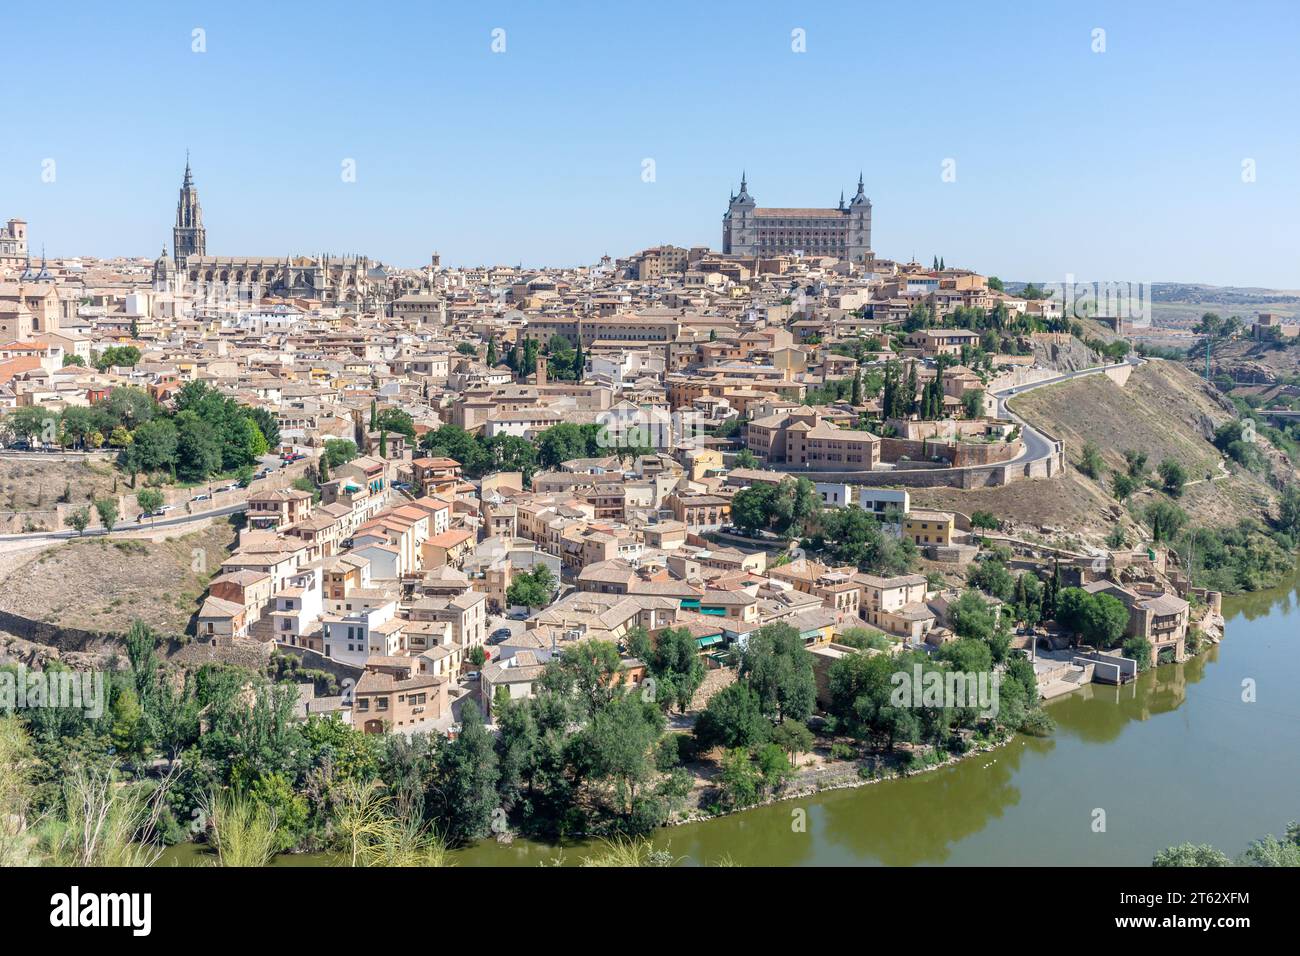 Old city view over Tagus River, Toledo, Castilla–La Mancha, Kingdom of Spain Stock Photo